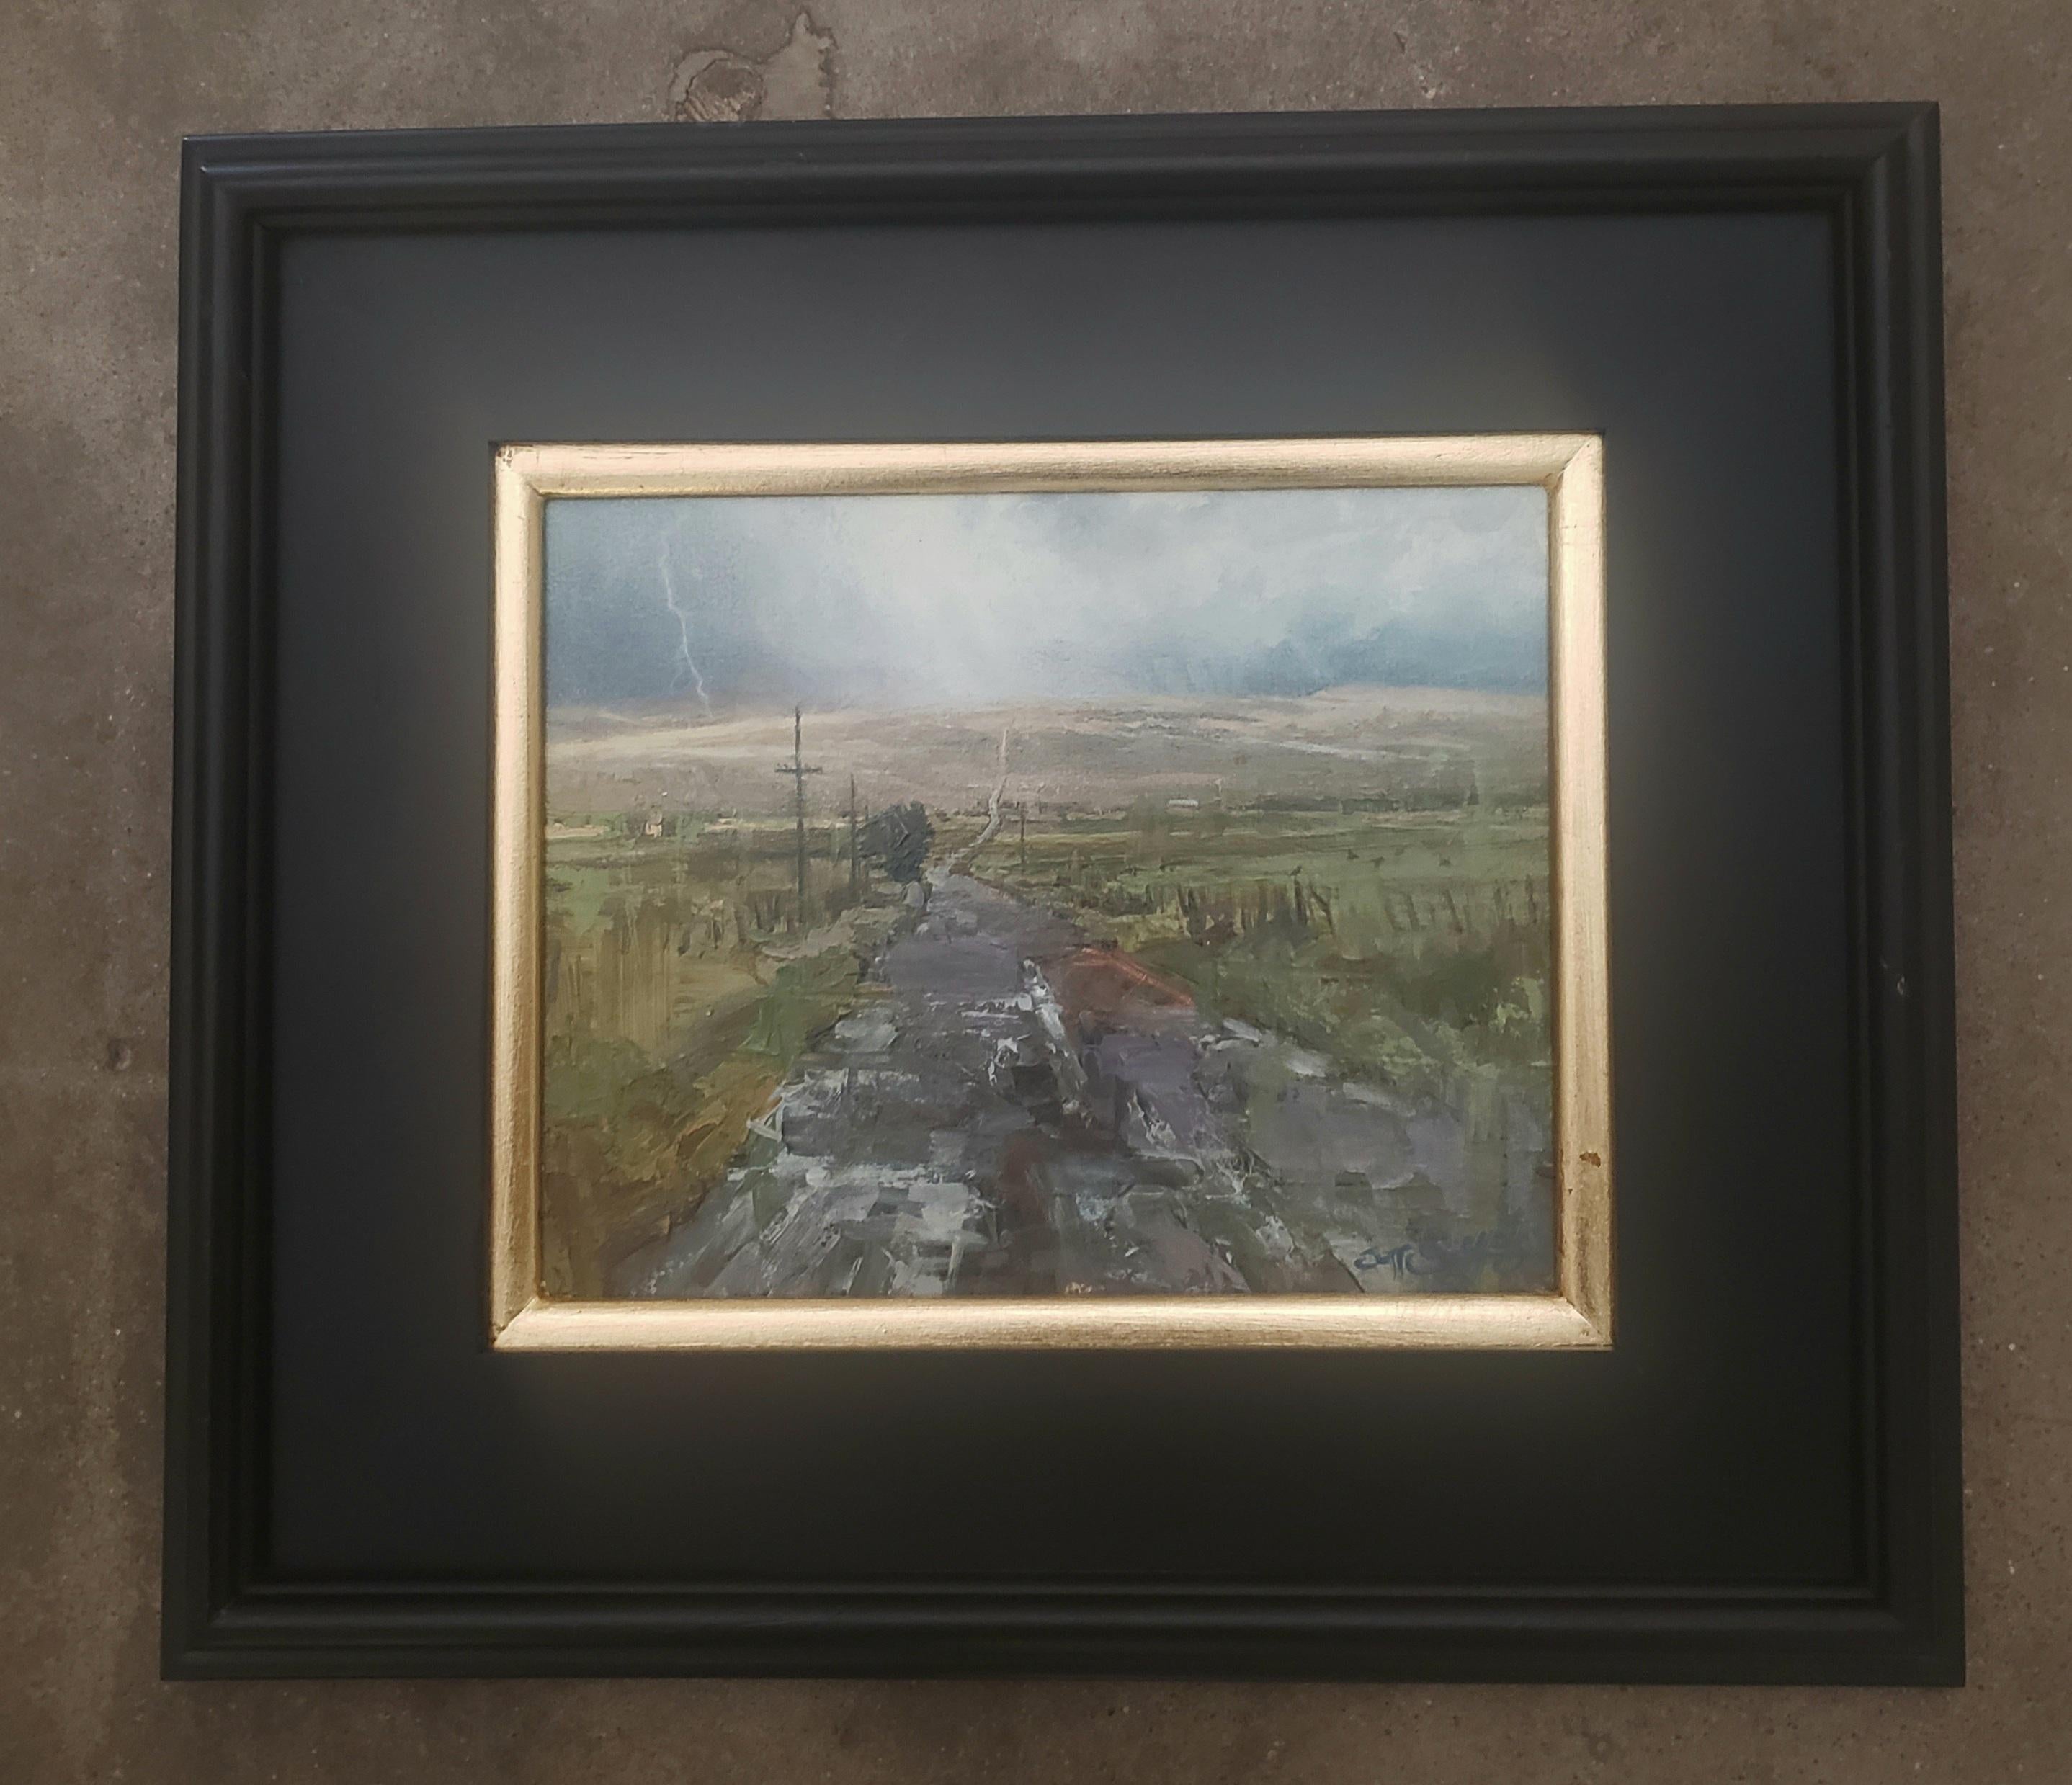  Colorado Drive Impressionism Oil  8x 10 Panel   Palette Knife   Framed  - Painting by Jeff Slemons